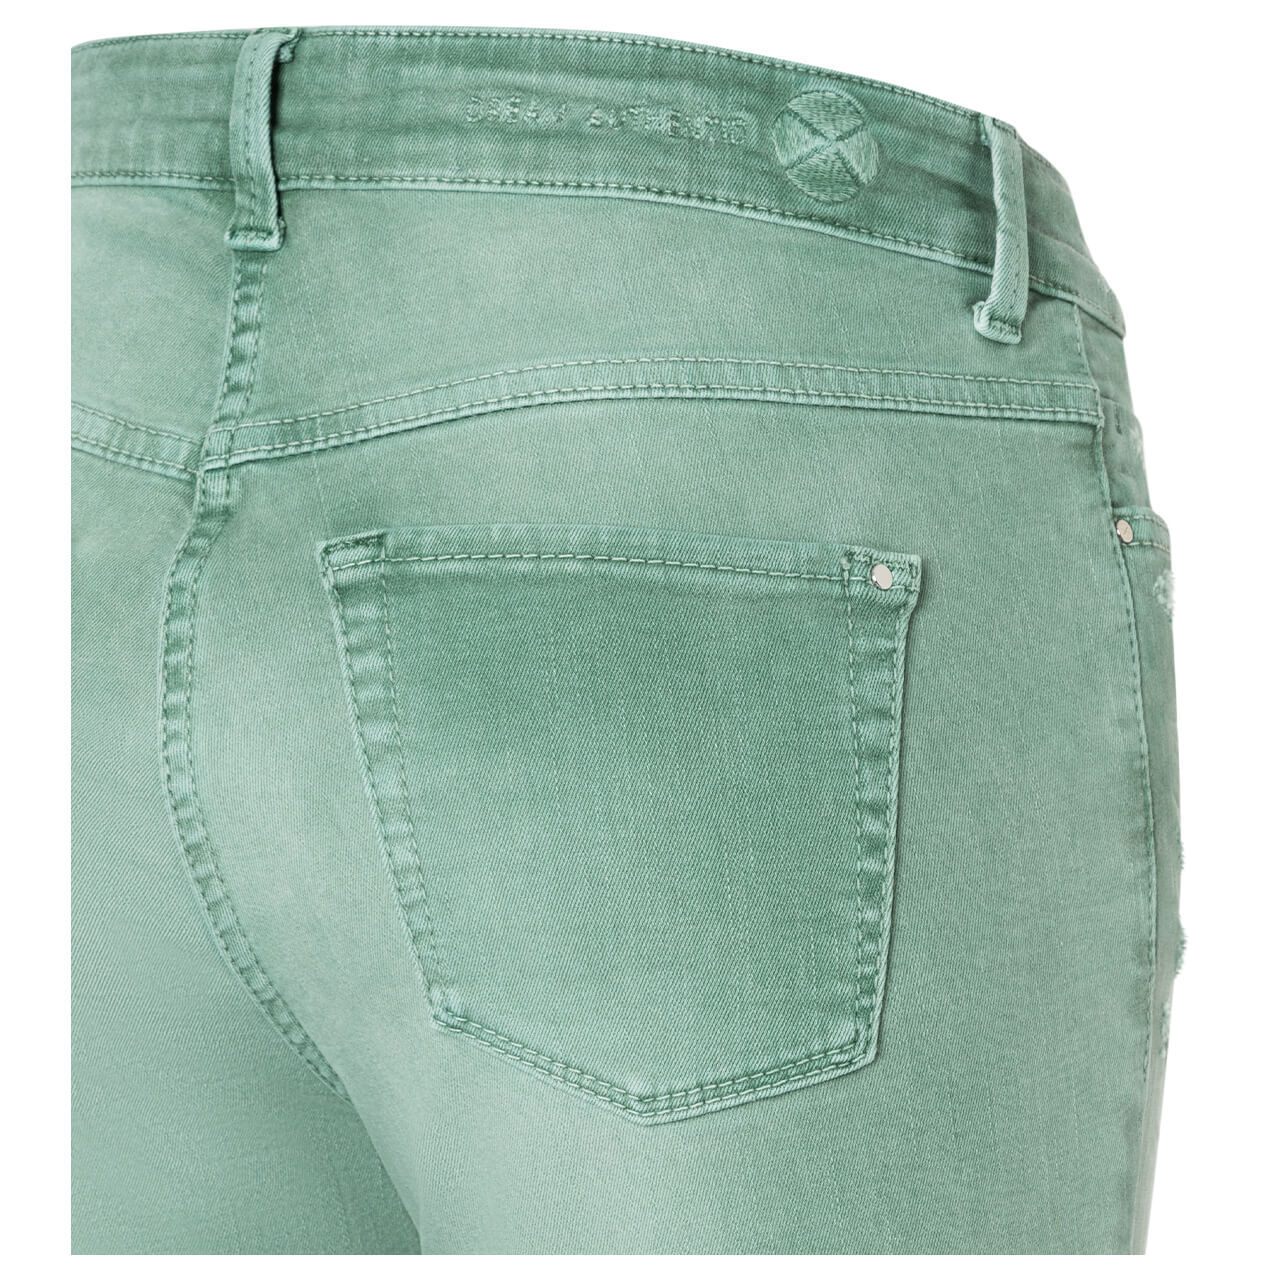 MAC Dream Chic 7/8 Jeans bright smoked green